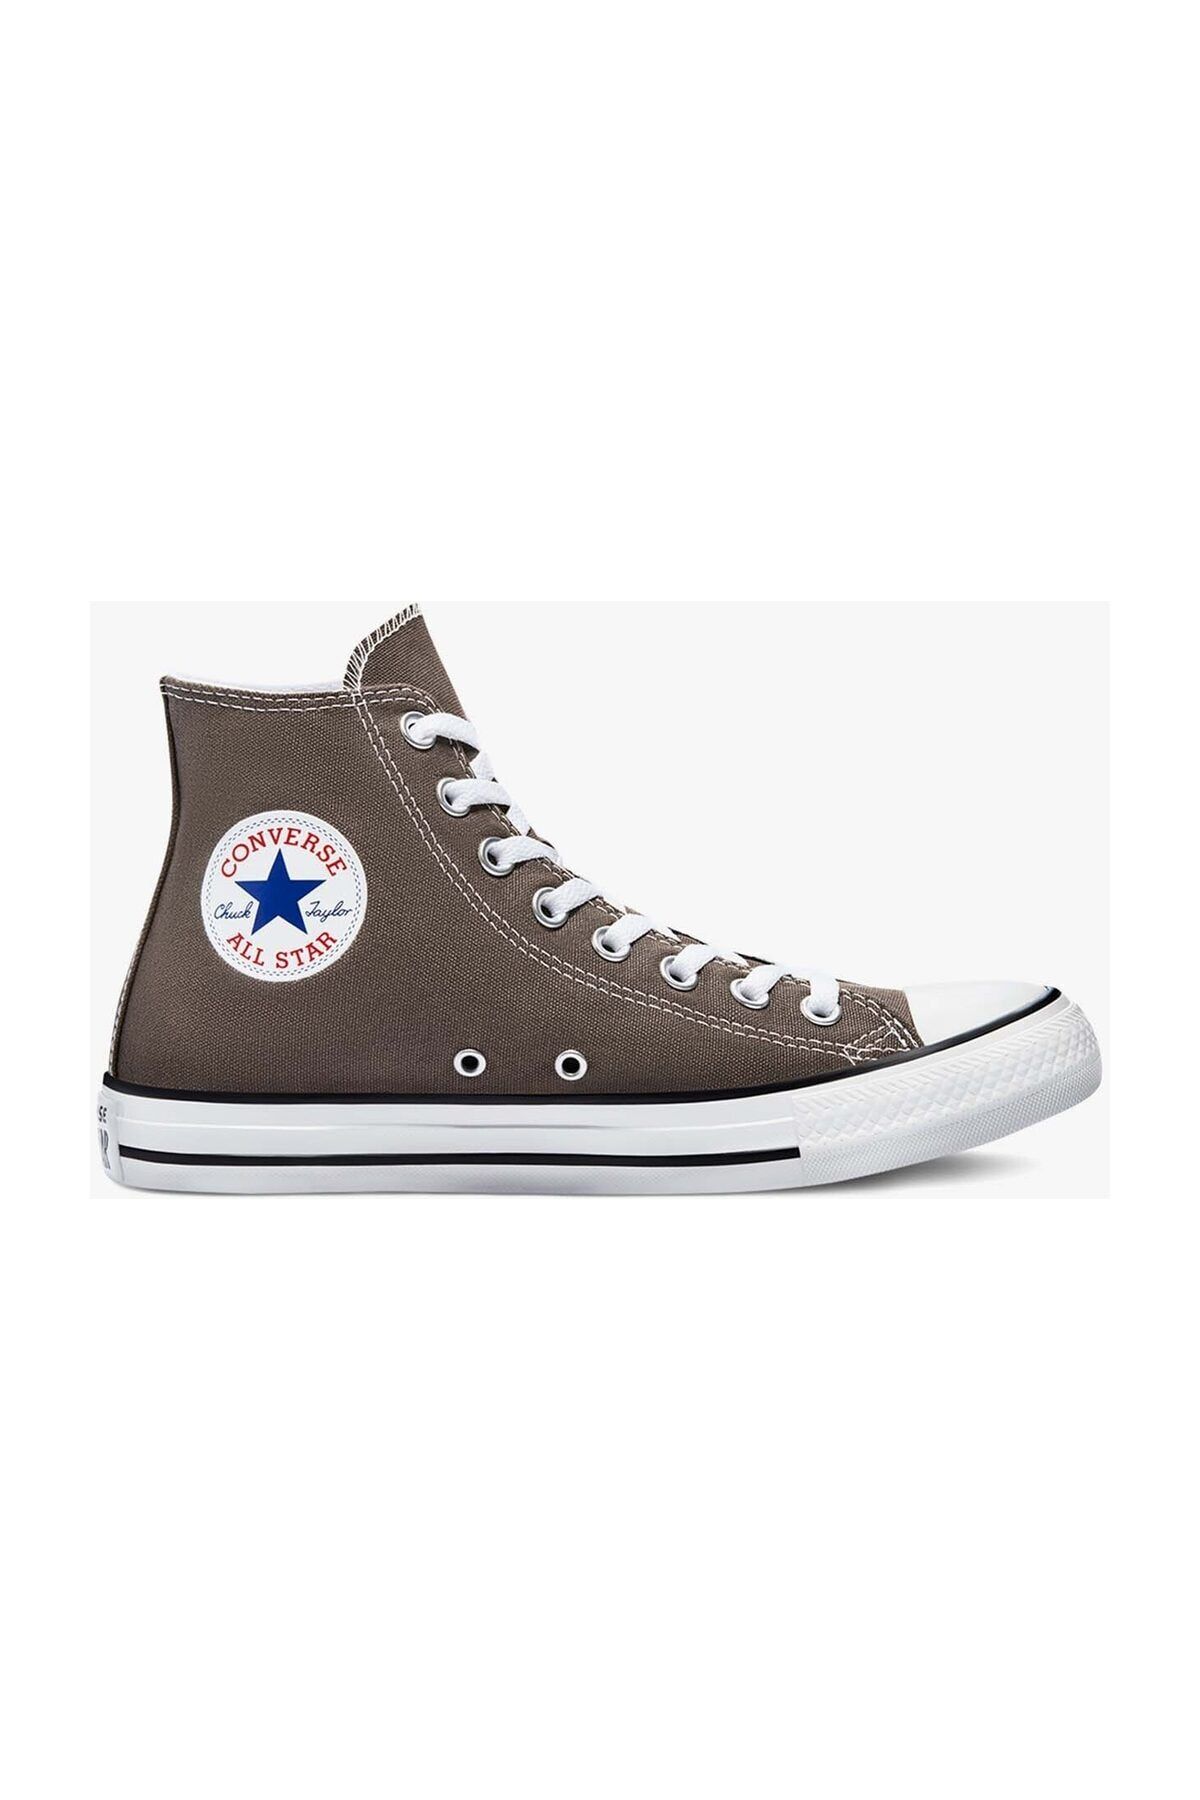 Converse Chuck Taylor All Star 1j793c Unisex Gri Sneaker